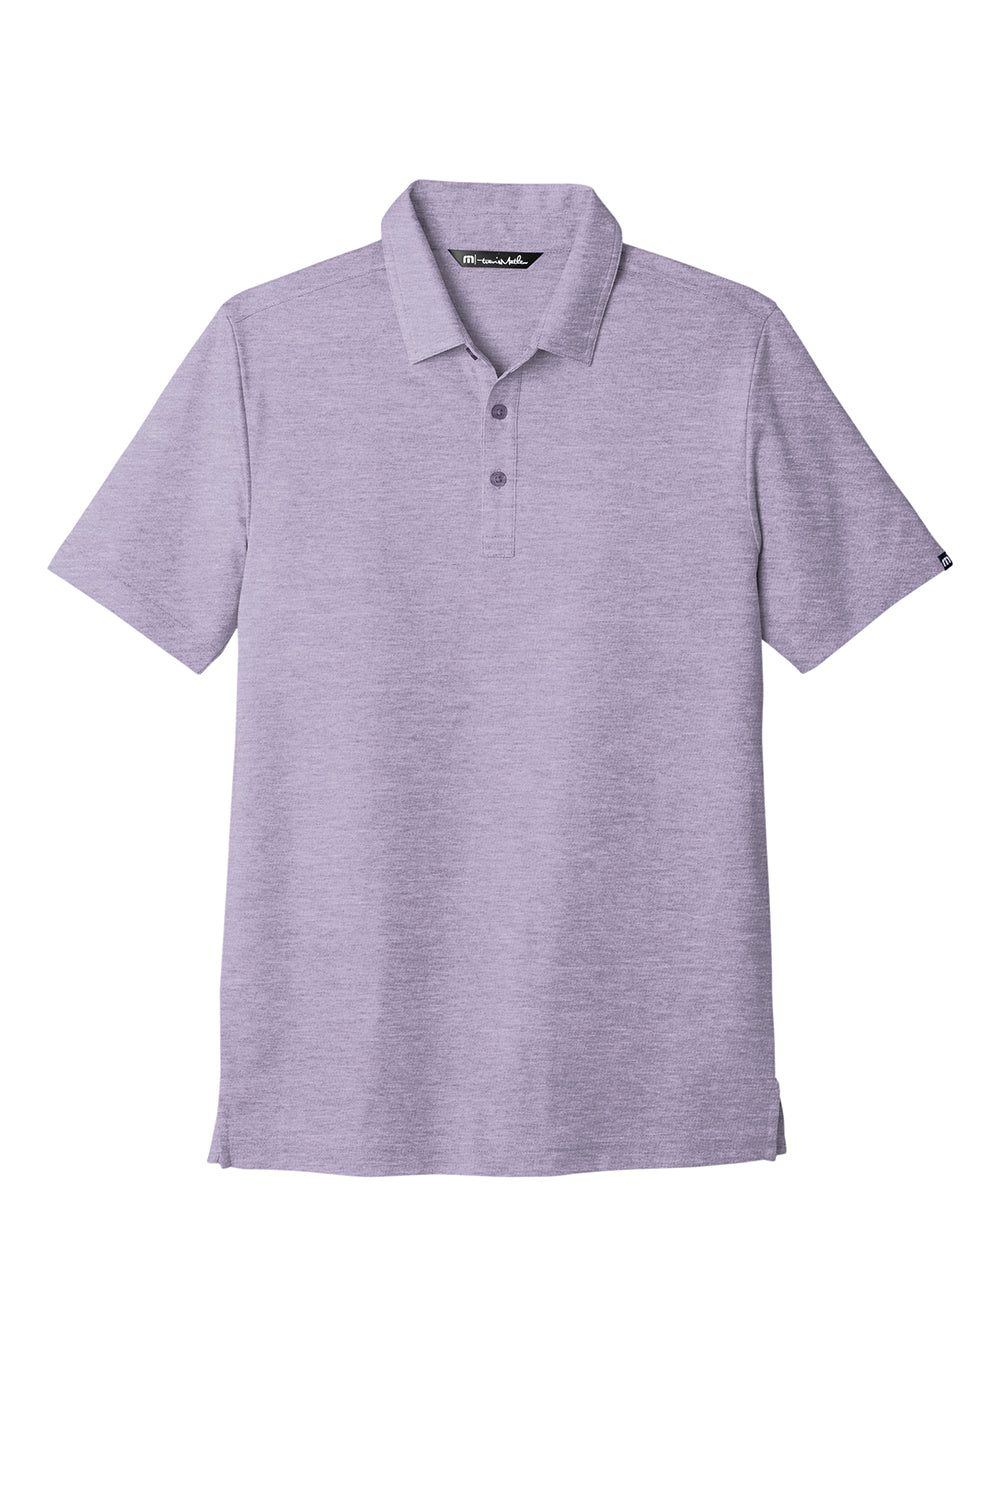 TravisMathew TM1MU412 Mens Oceanside Moisture Wicking Short Sleeve Polo Shirt Heather Purple Sage Flat Front